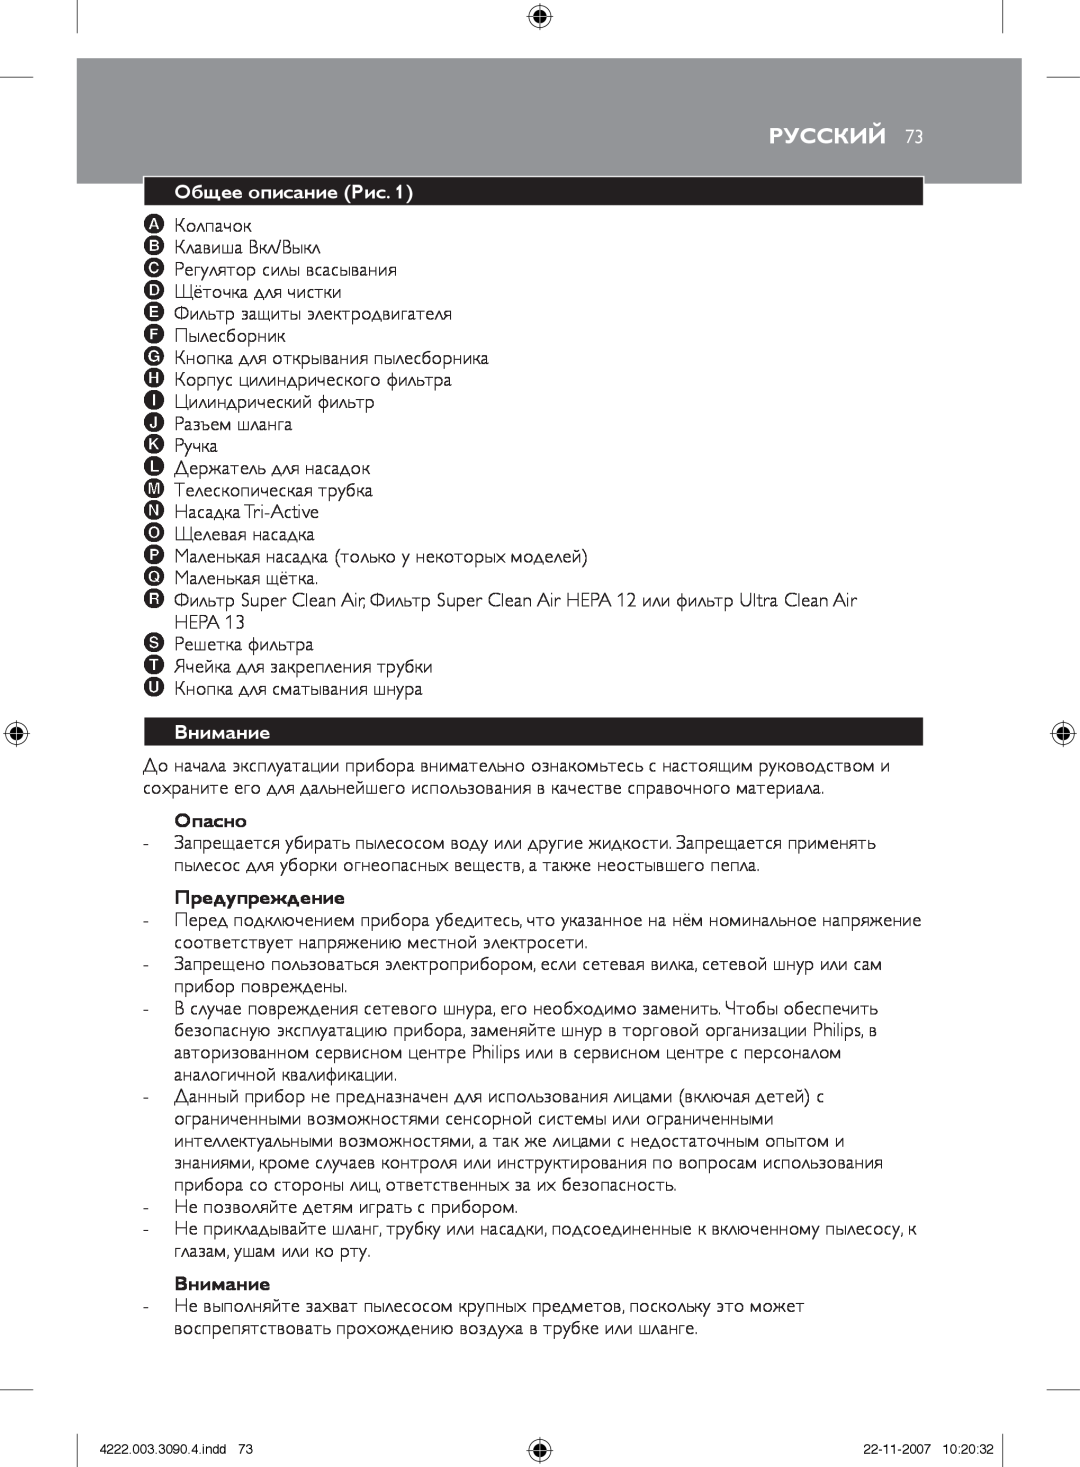 Nortel Networks FC9219 - FC9200 manual Русский, Общее описание Рис, Внимание, Опасно, Предупреждение 